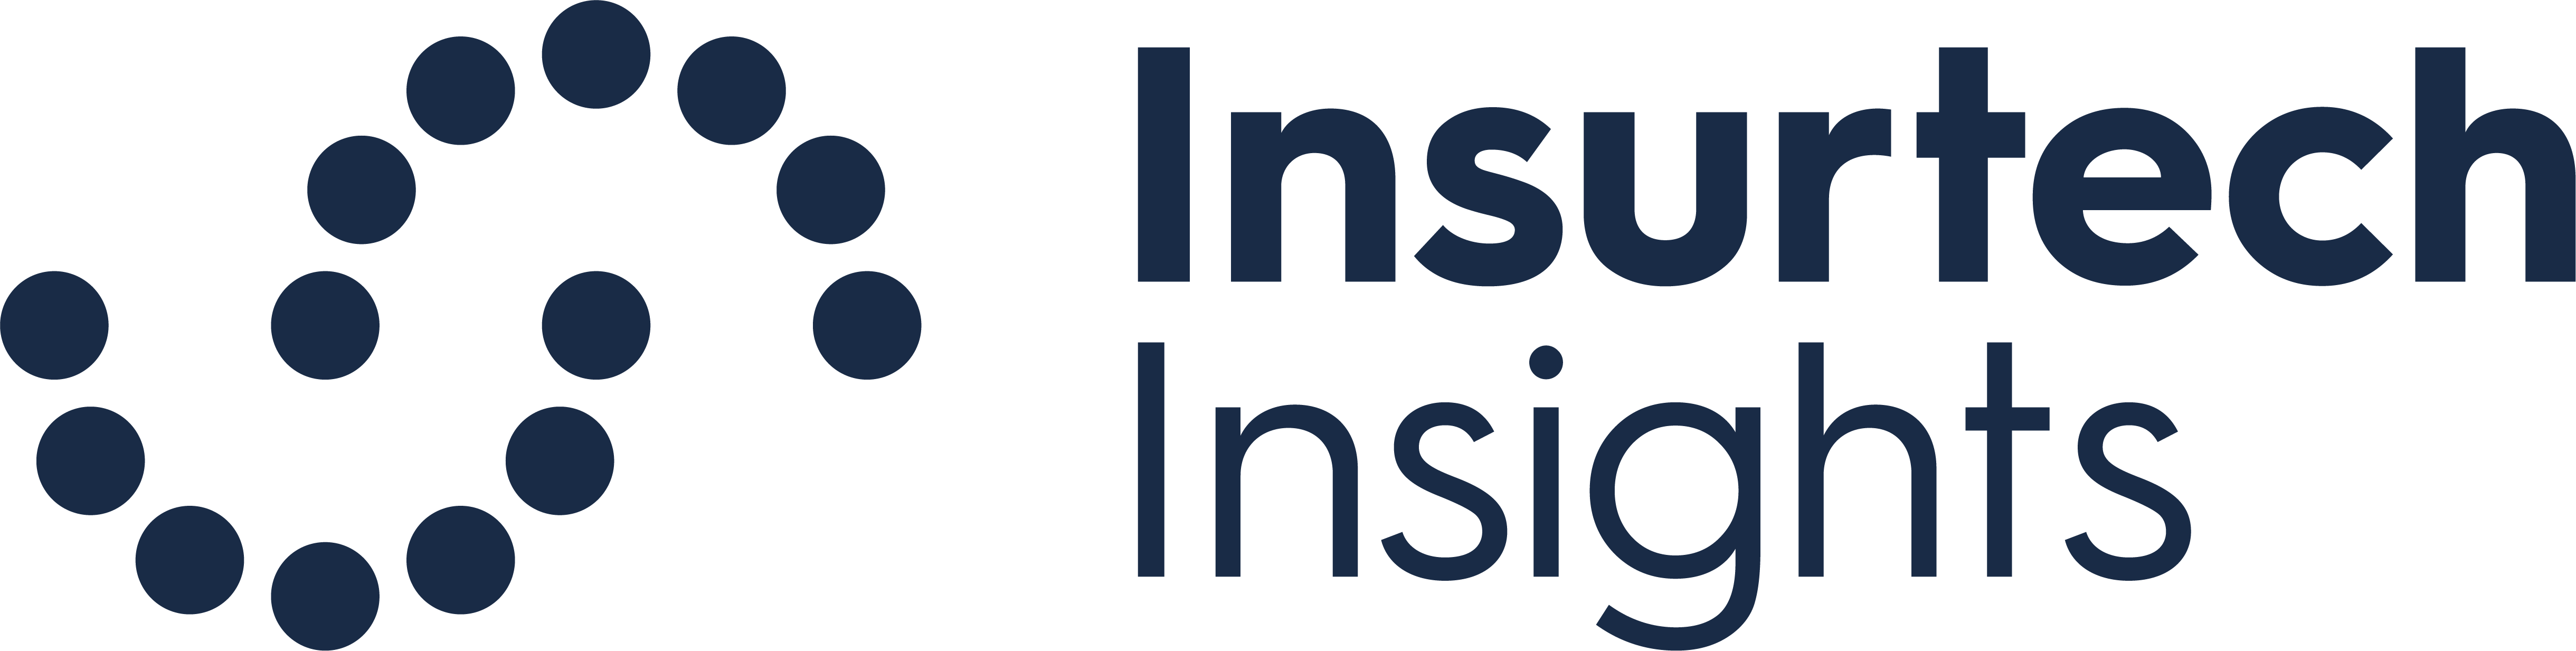 Transparent-PNG-logo-Insurtech Insights